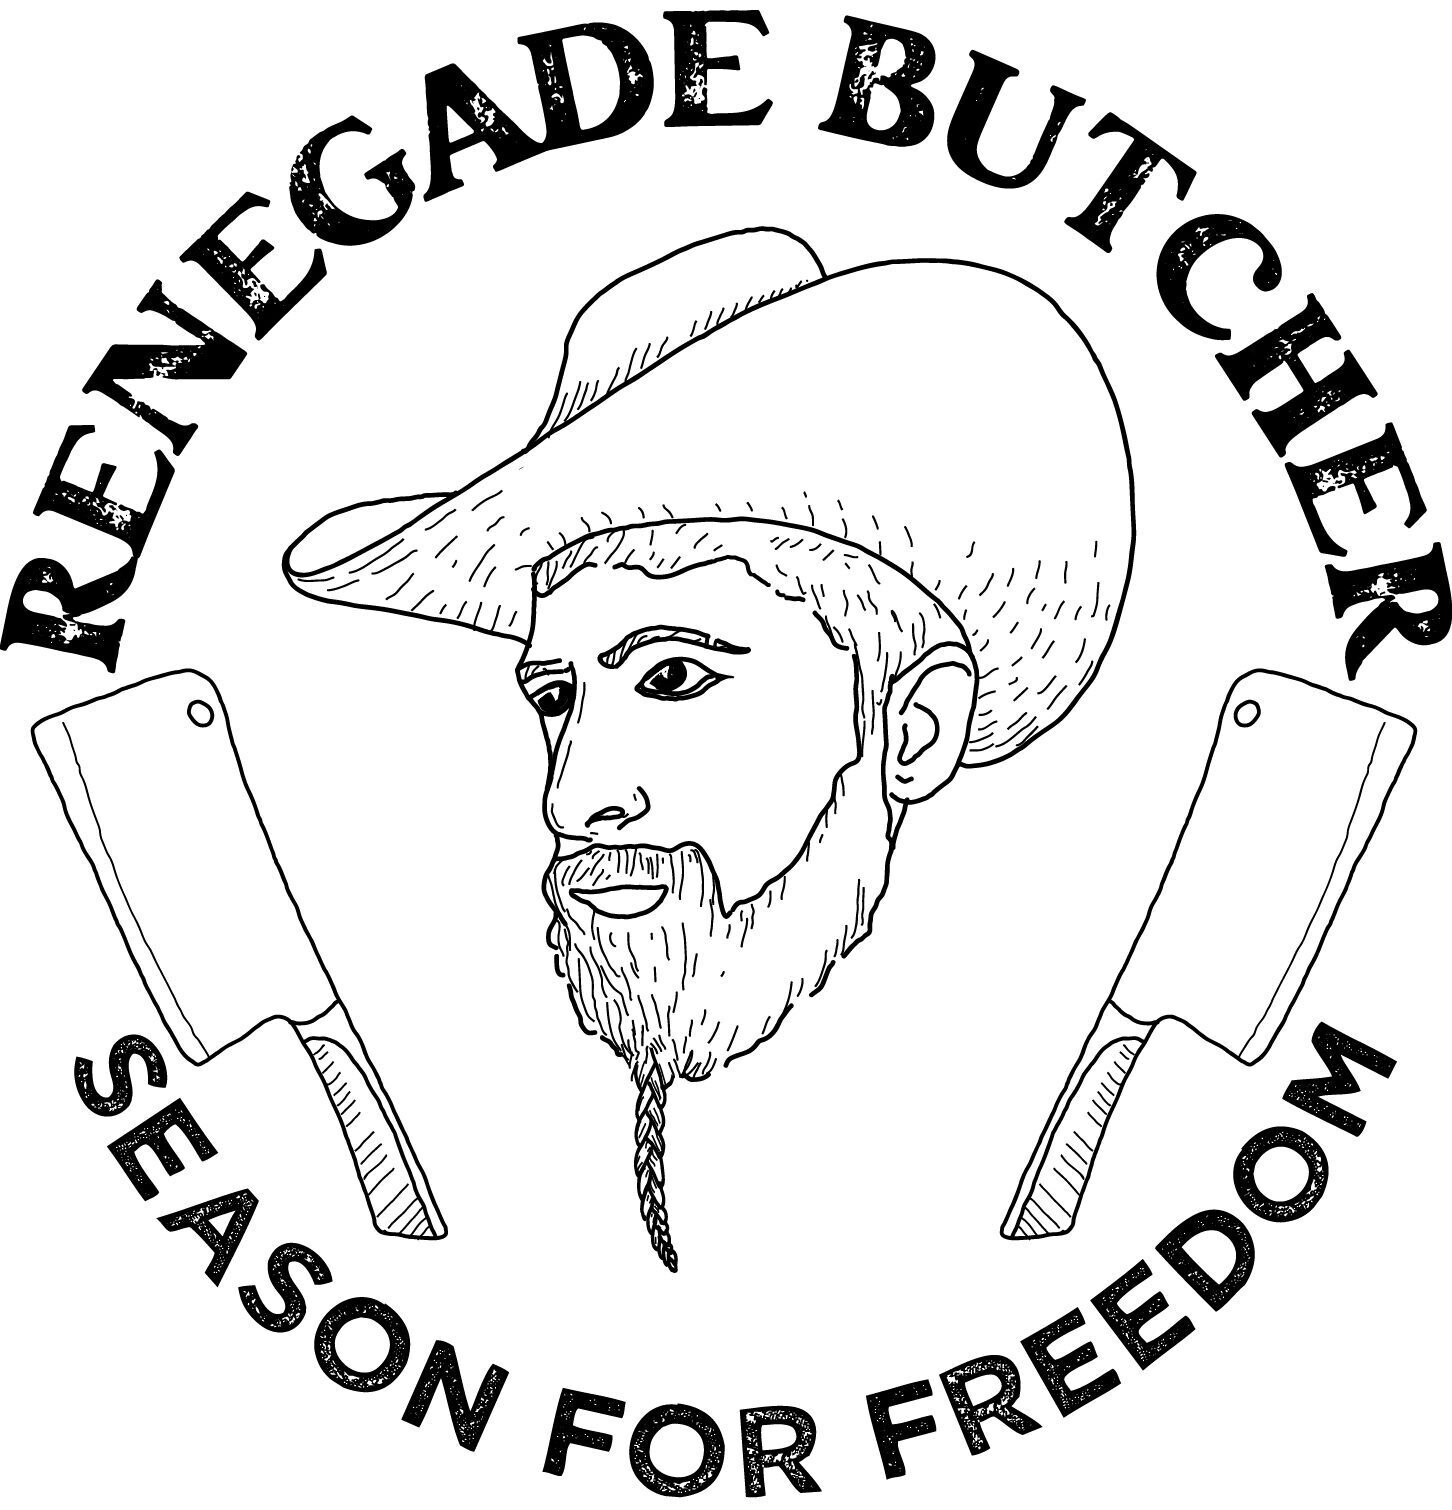 Renegade Butcher – Season for Freedom